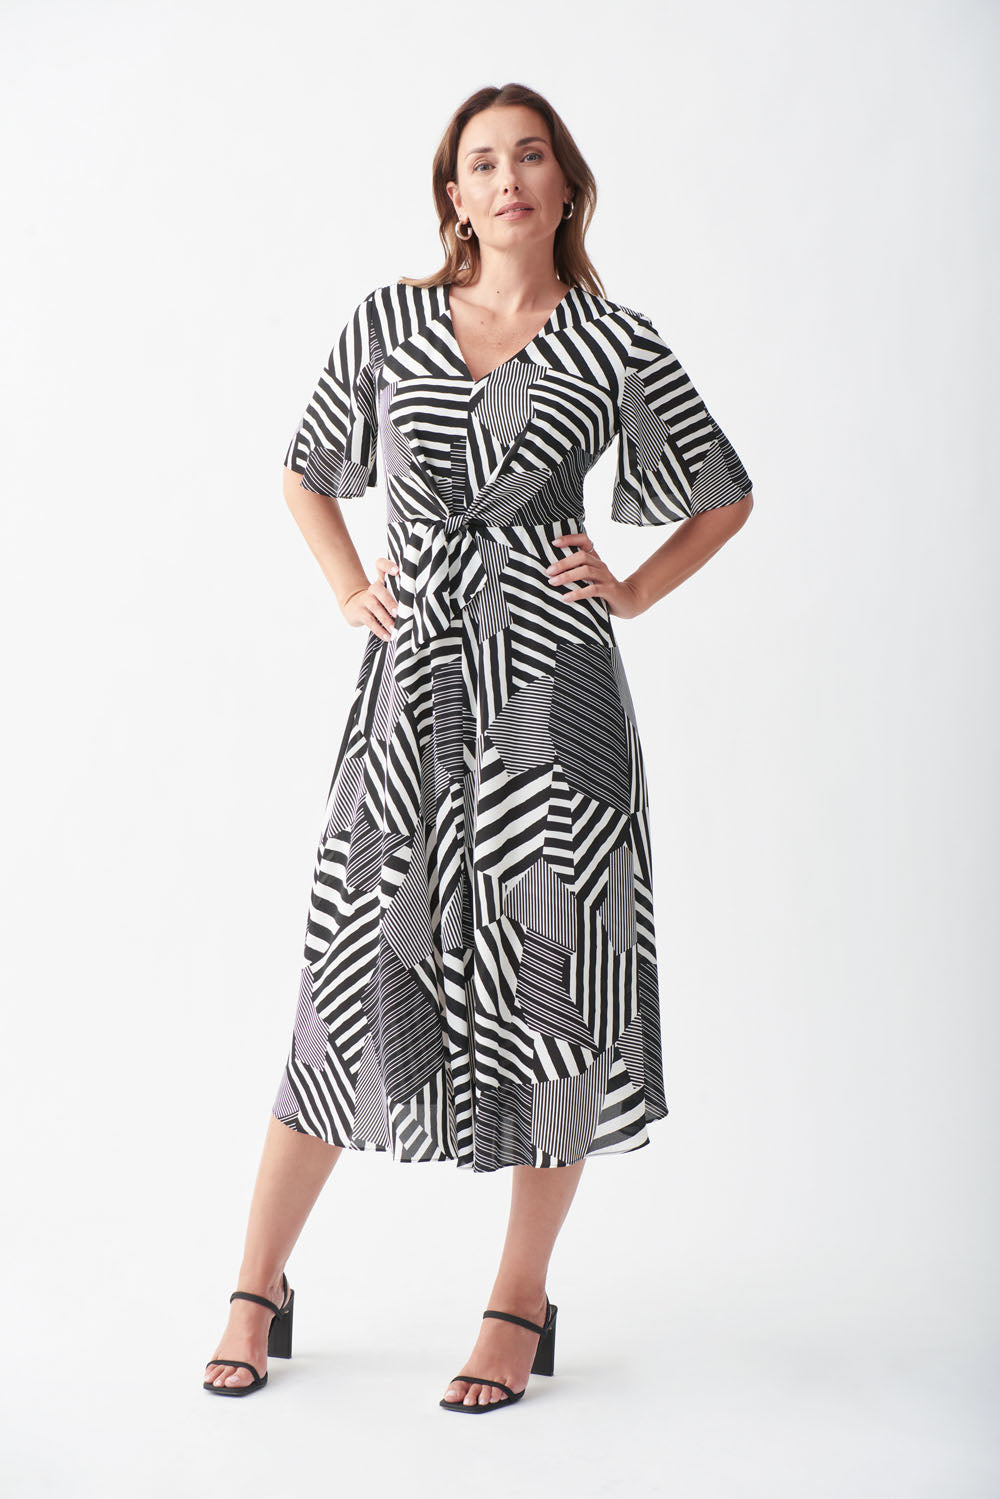 Joseph Ribkoff Black-Vanilla Patchwork Dress Style 221130